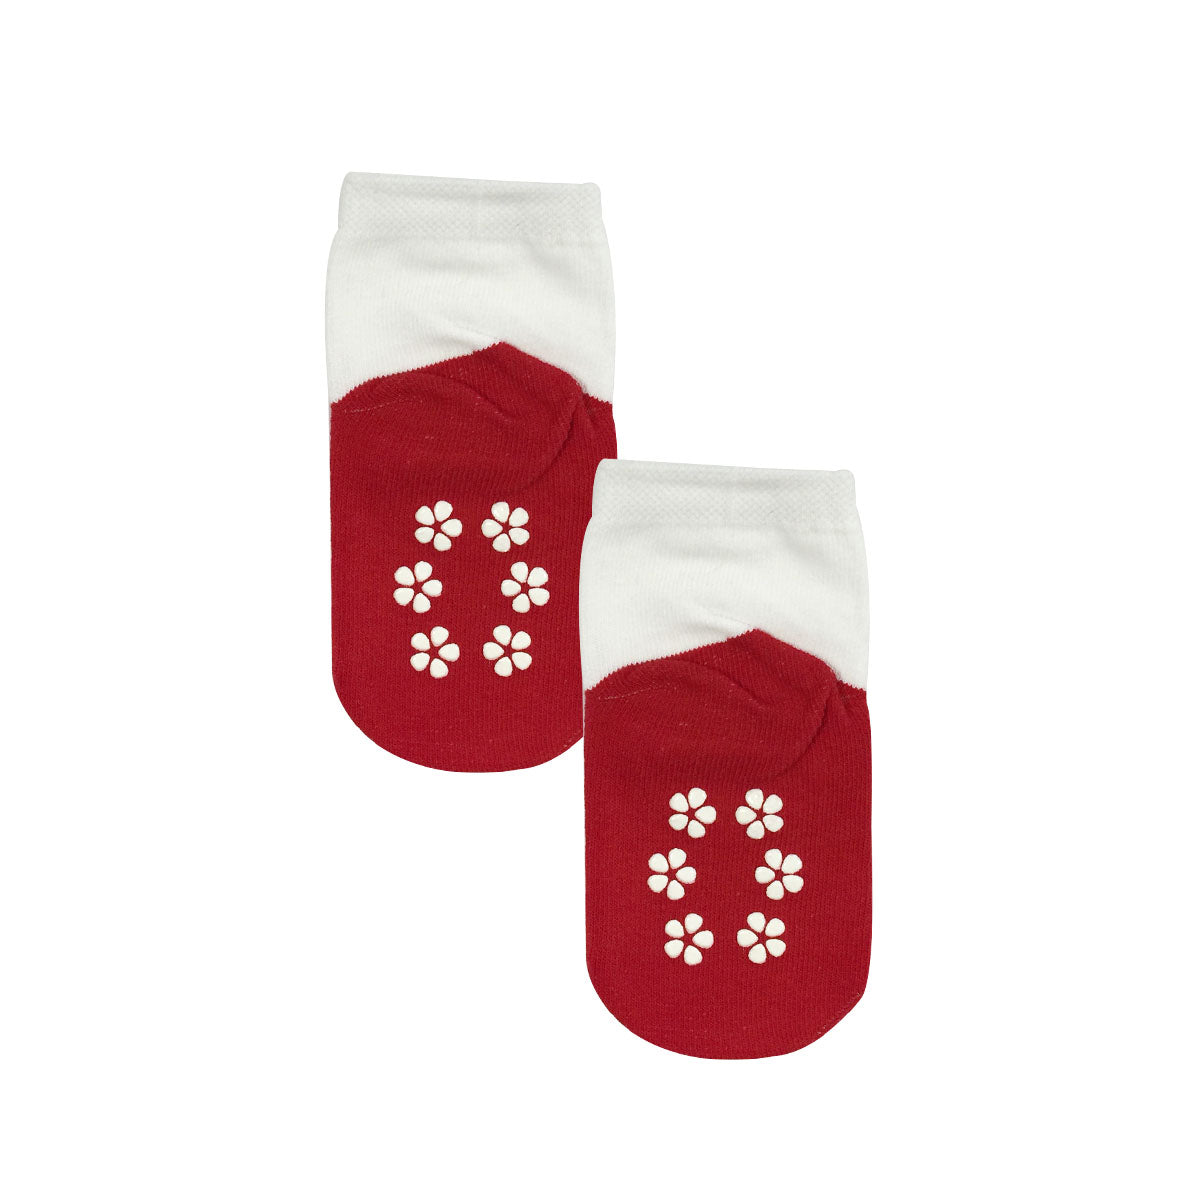 Wrapables Anti Slip Mary Jane Socks for Babies (Set of 4)